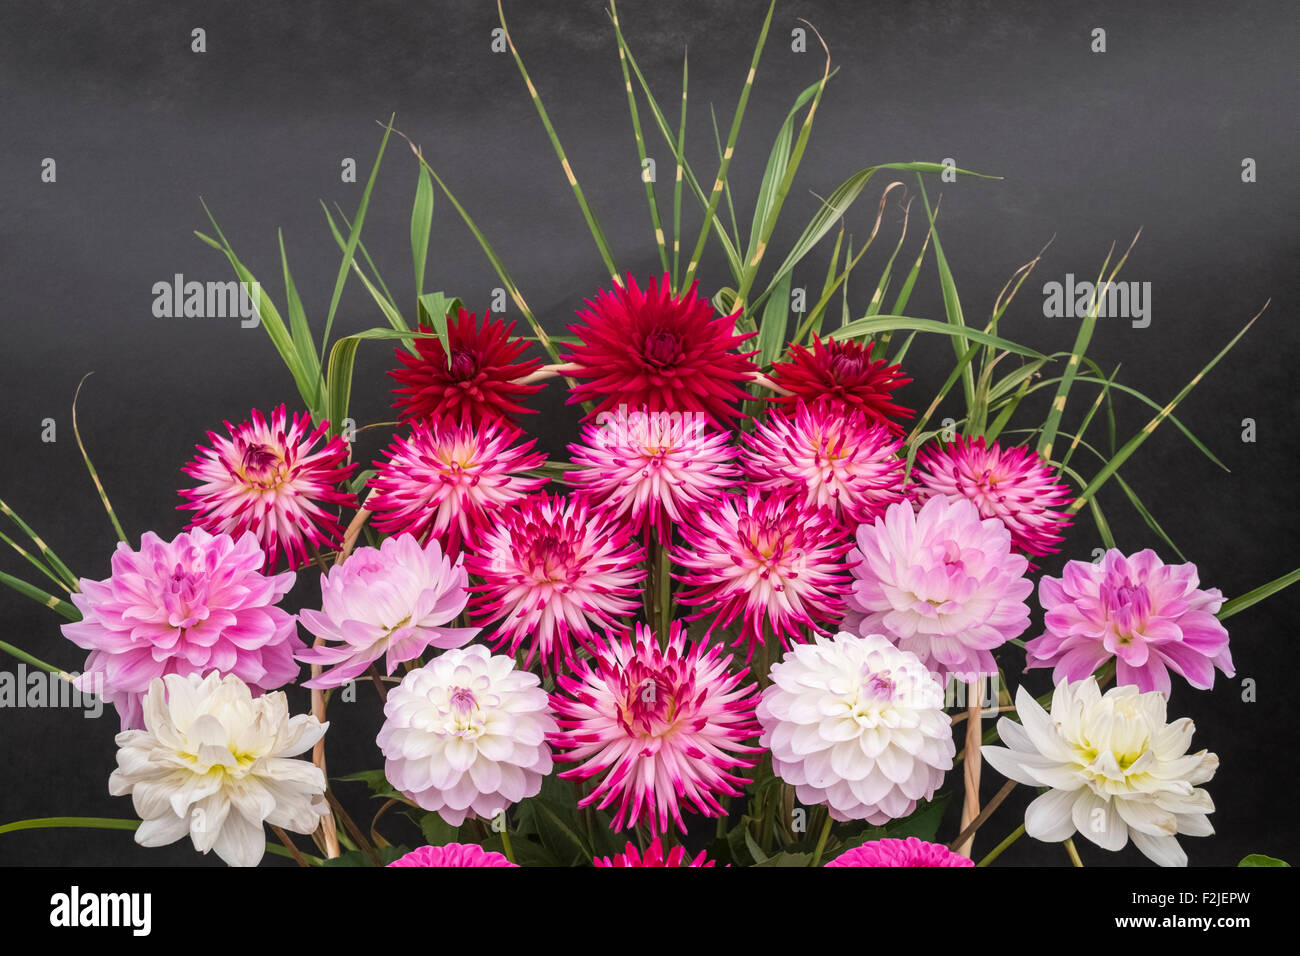 Display of flowering Dahlia plants Stock Photo